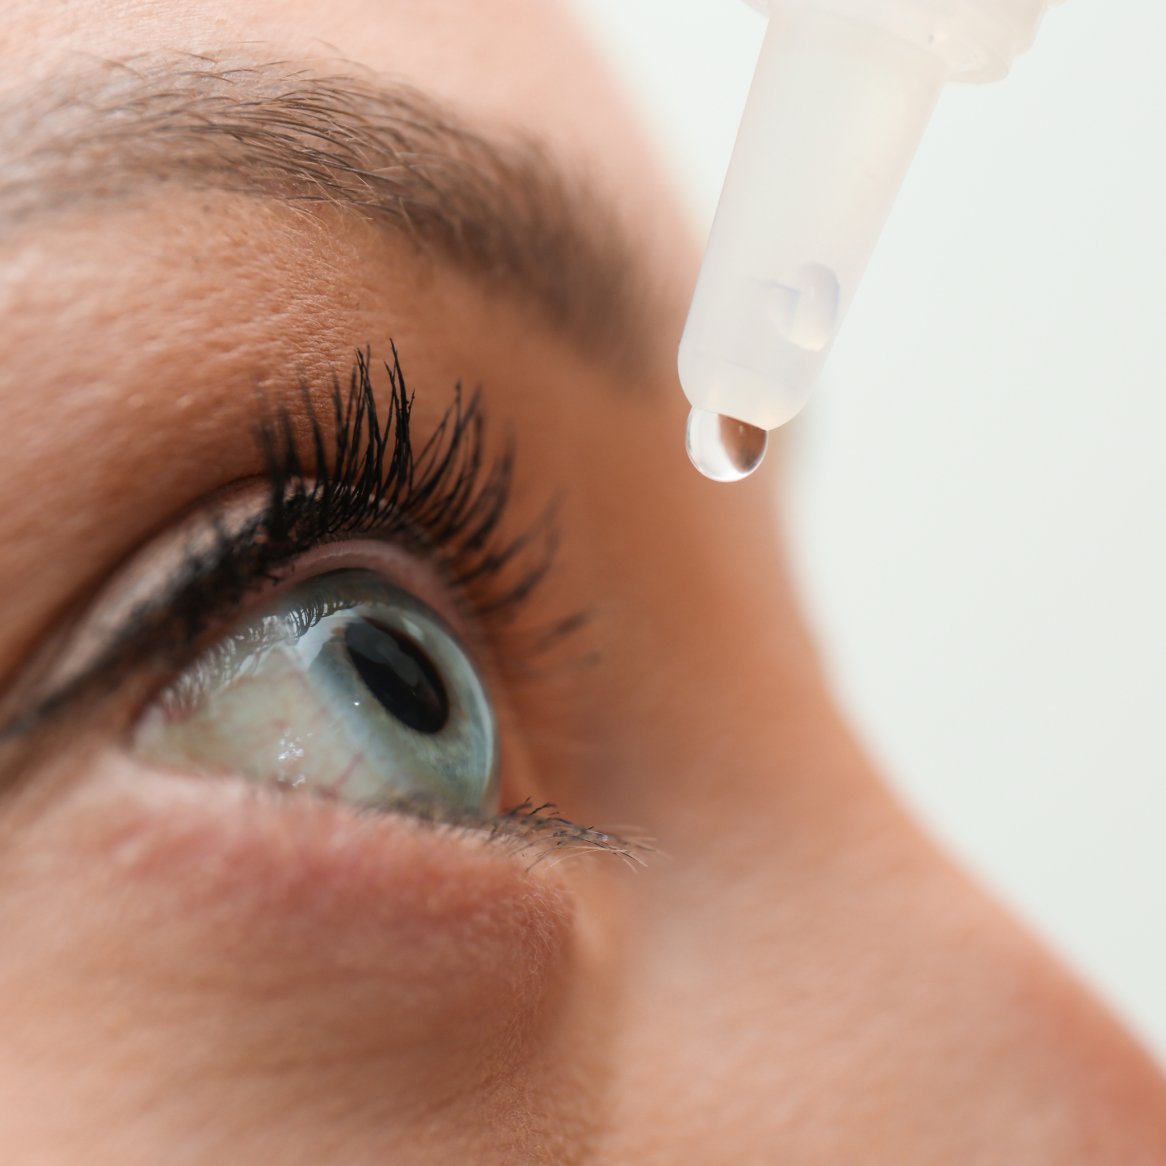 Close-up image of someone applying eye drops